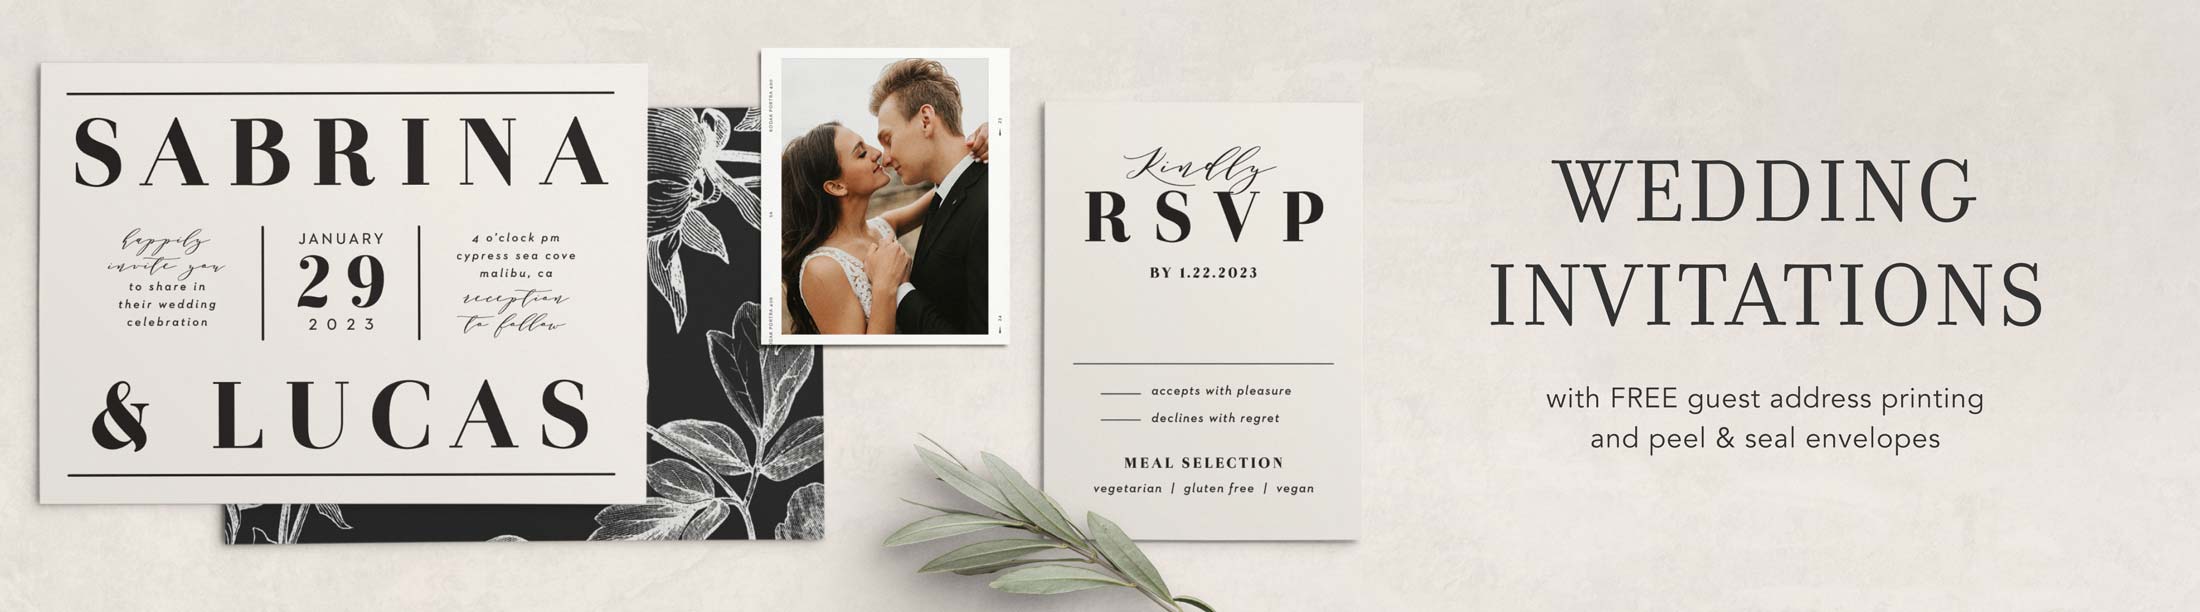 DIY Wedding Invitations Write Your Own Invites Day Night RSVP 1 